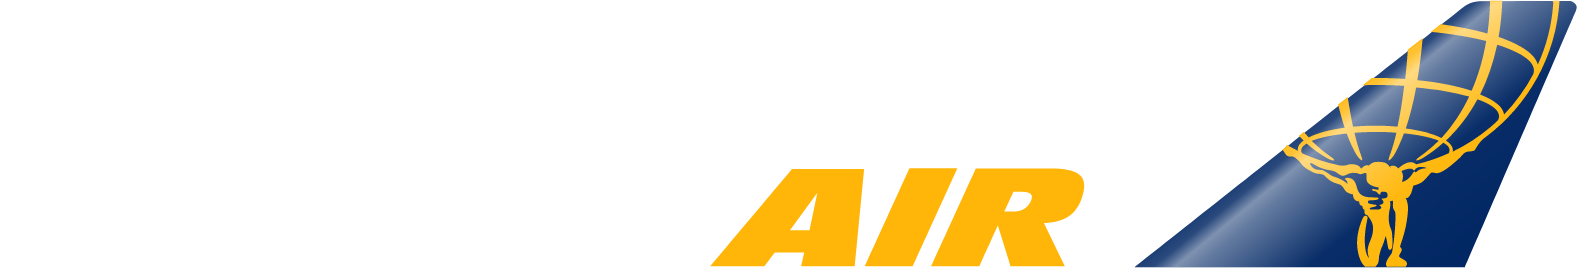 Atlas Air Worldwide Holdings Logo groß für dunkle Hintergründe (transparentes PNG)